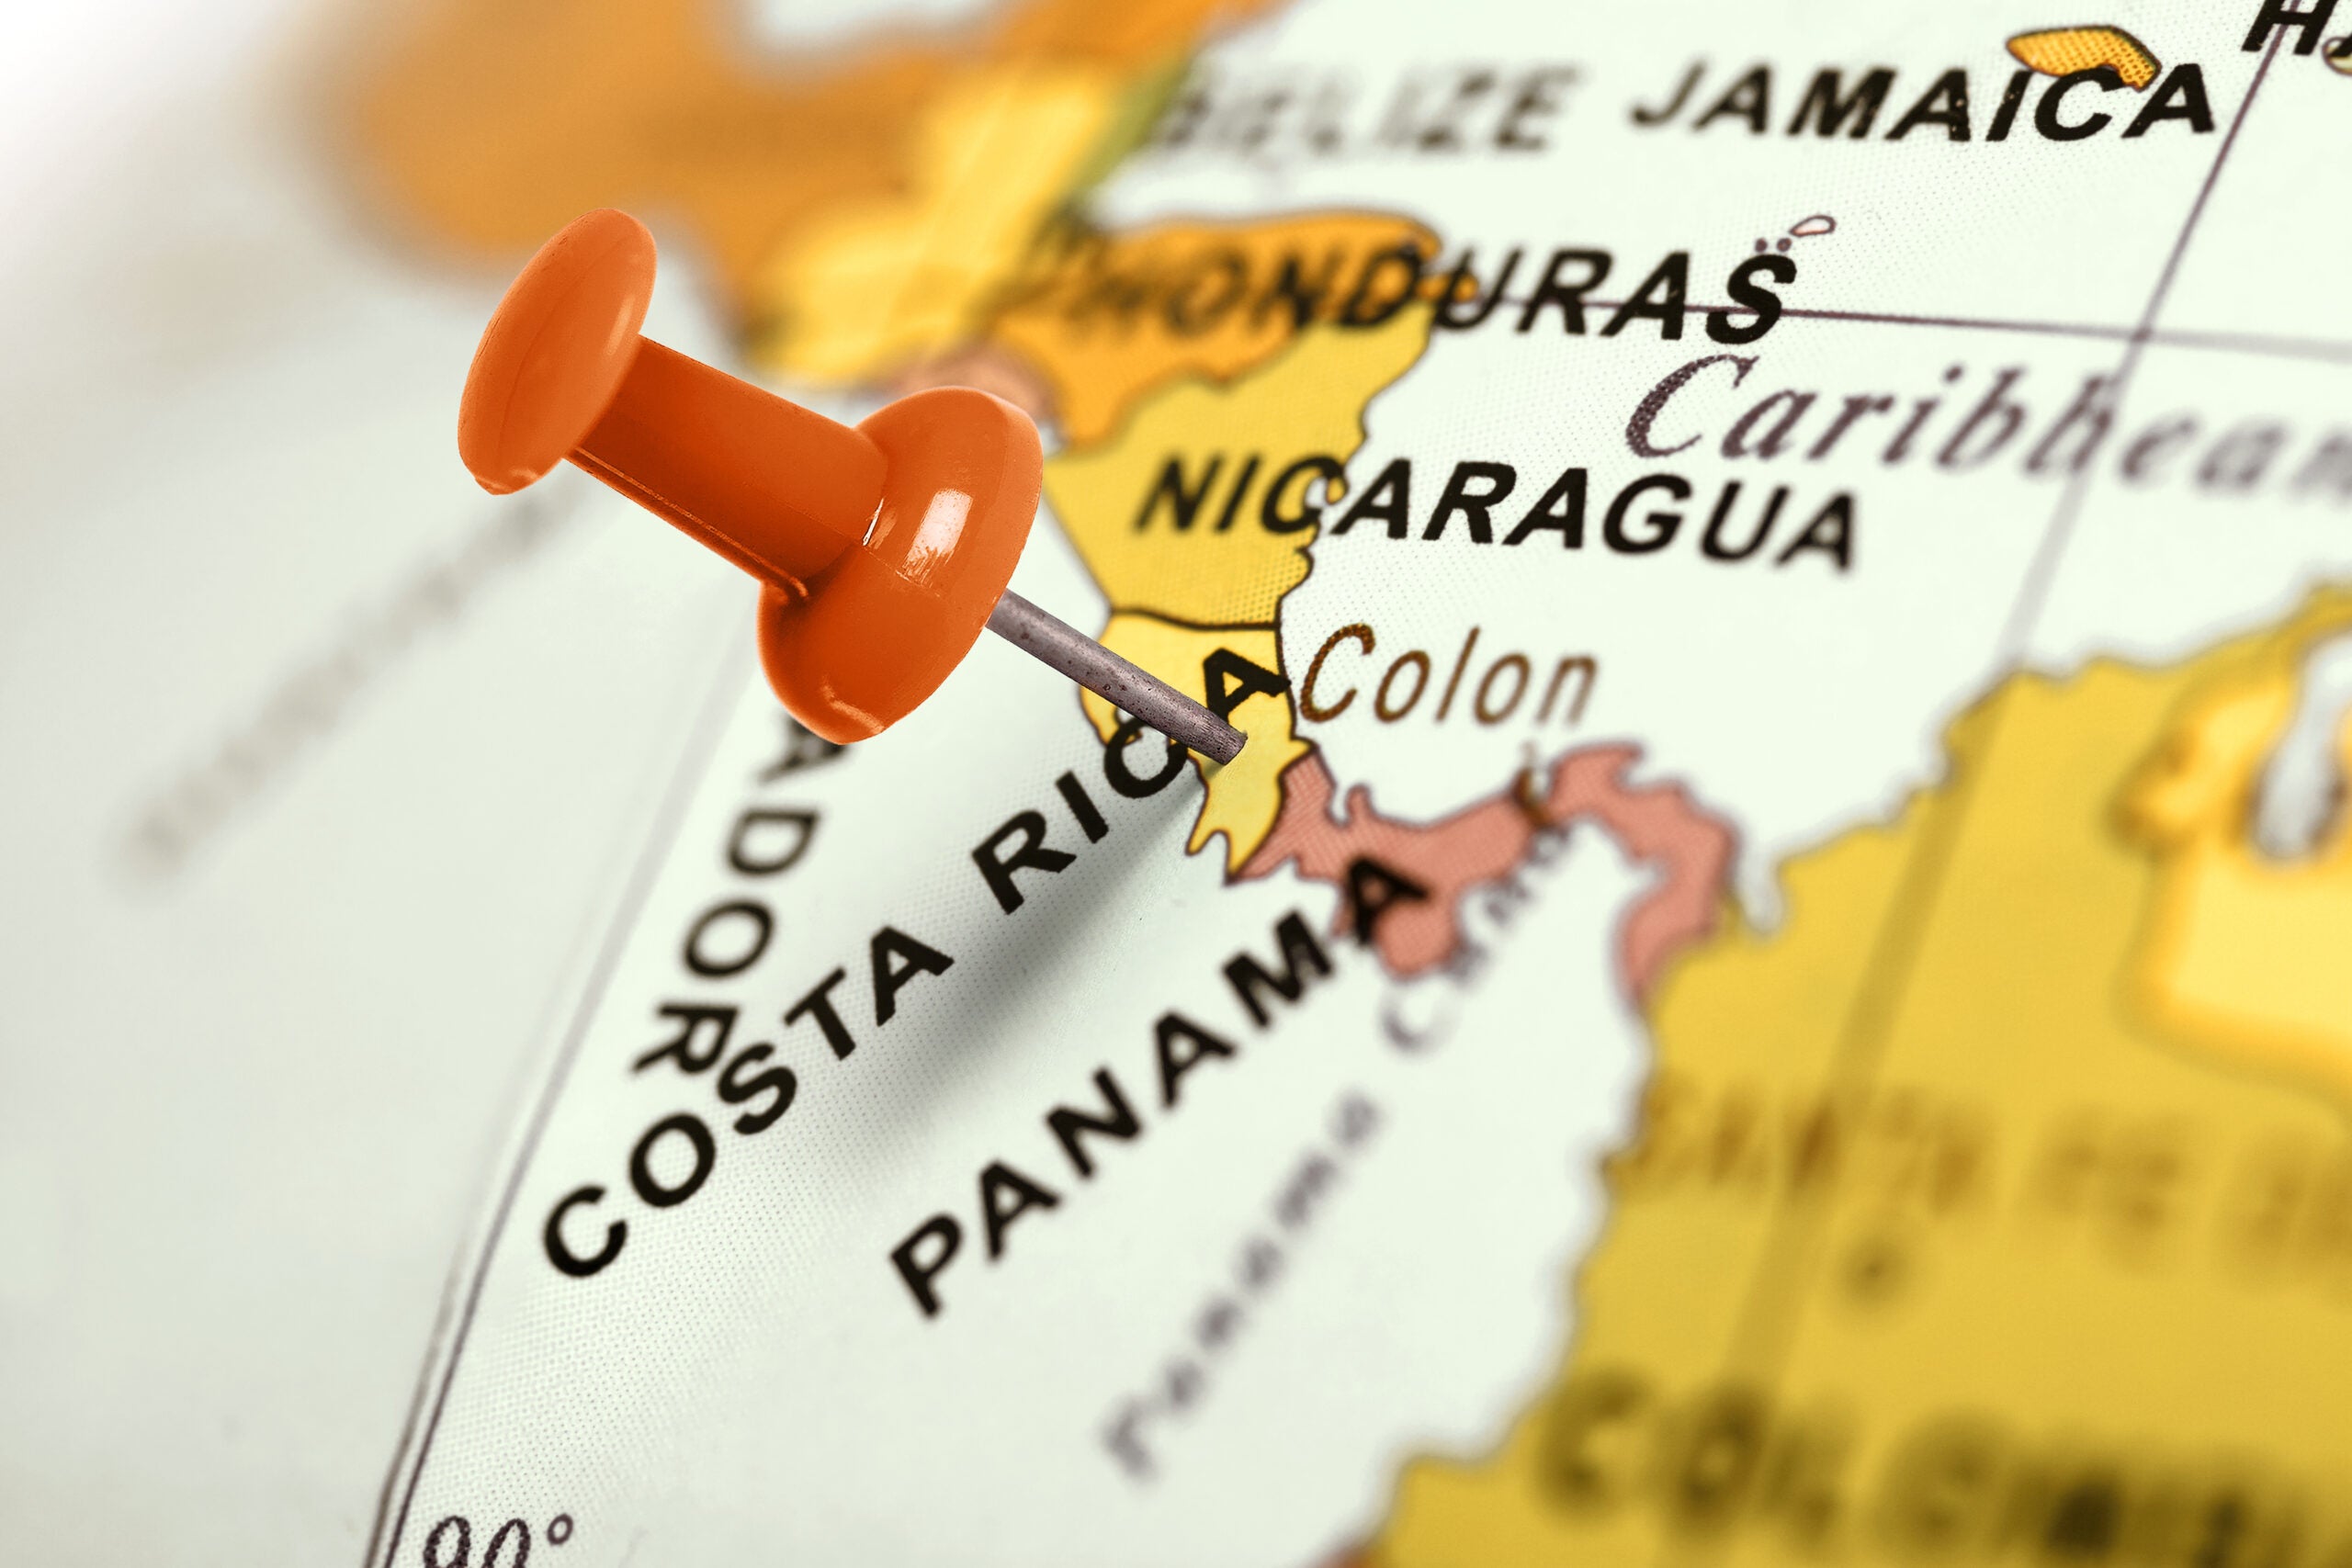 Costa Rica's Medical Marijuana & Hemp Legislation Shot down